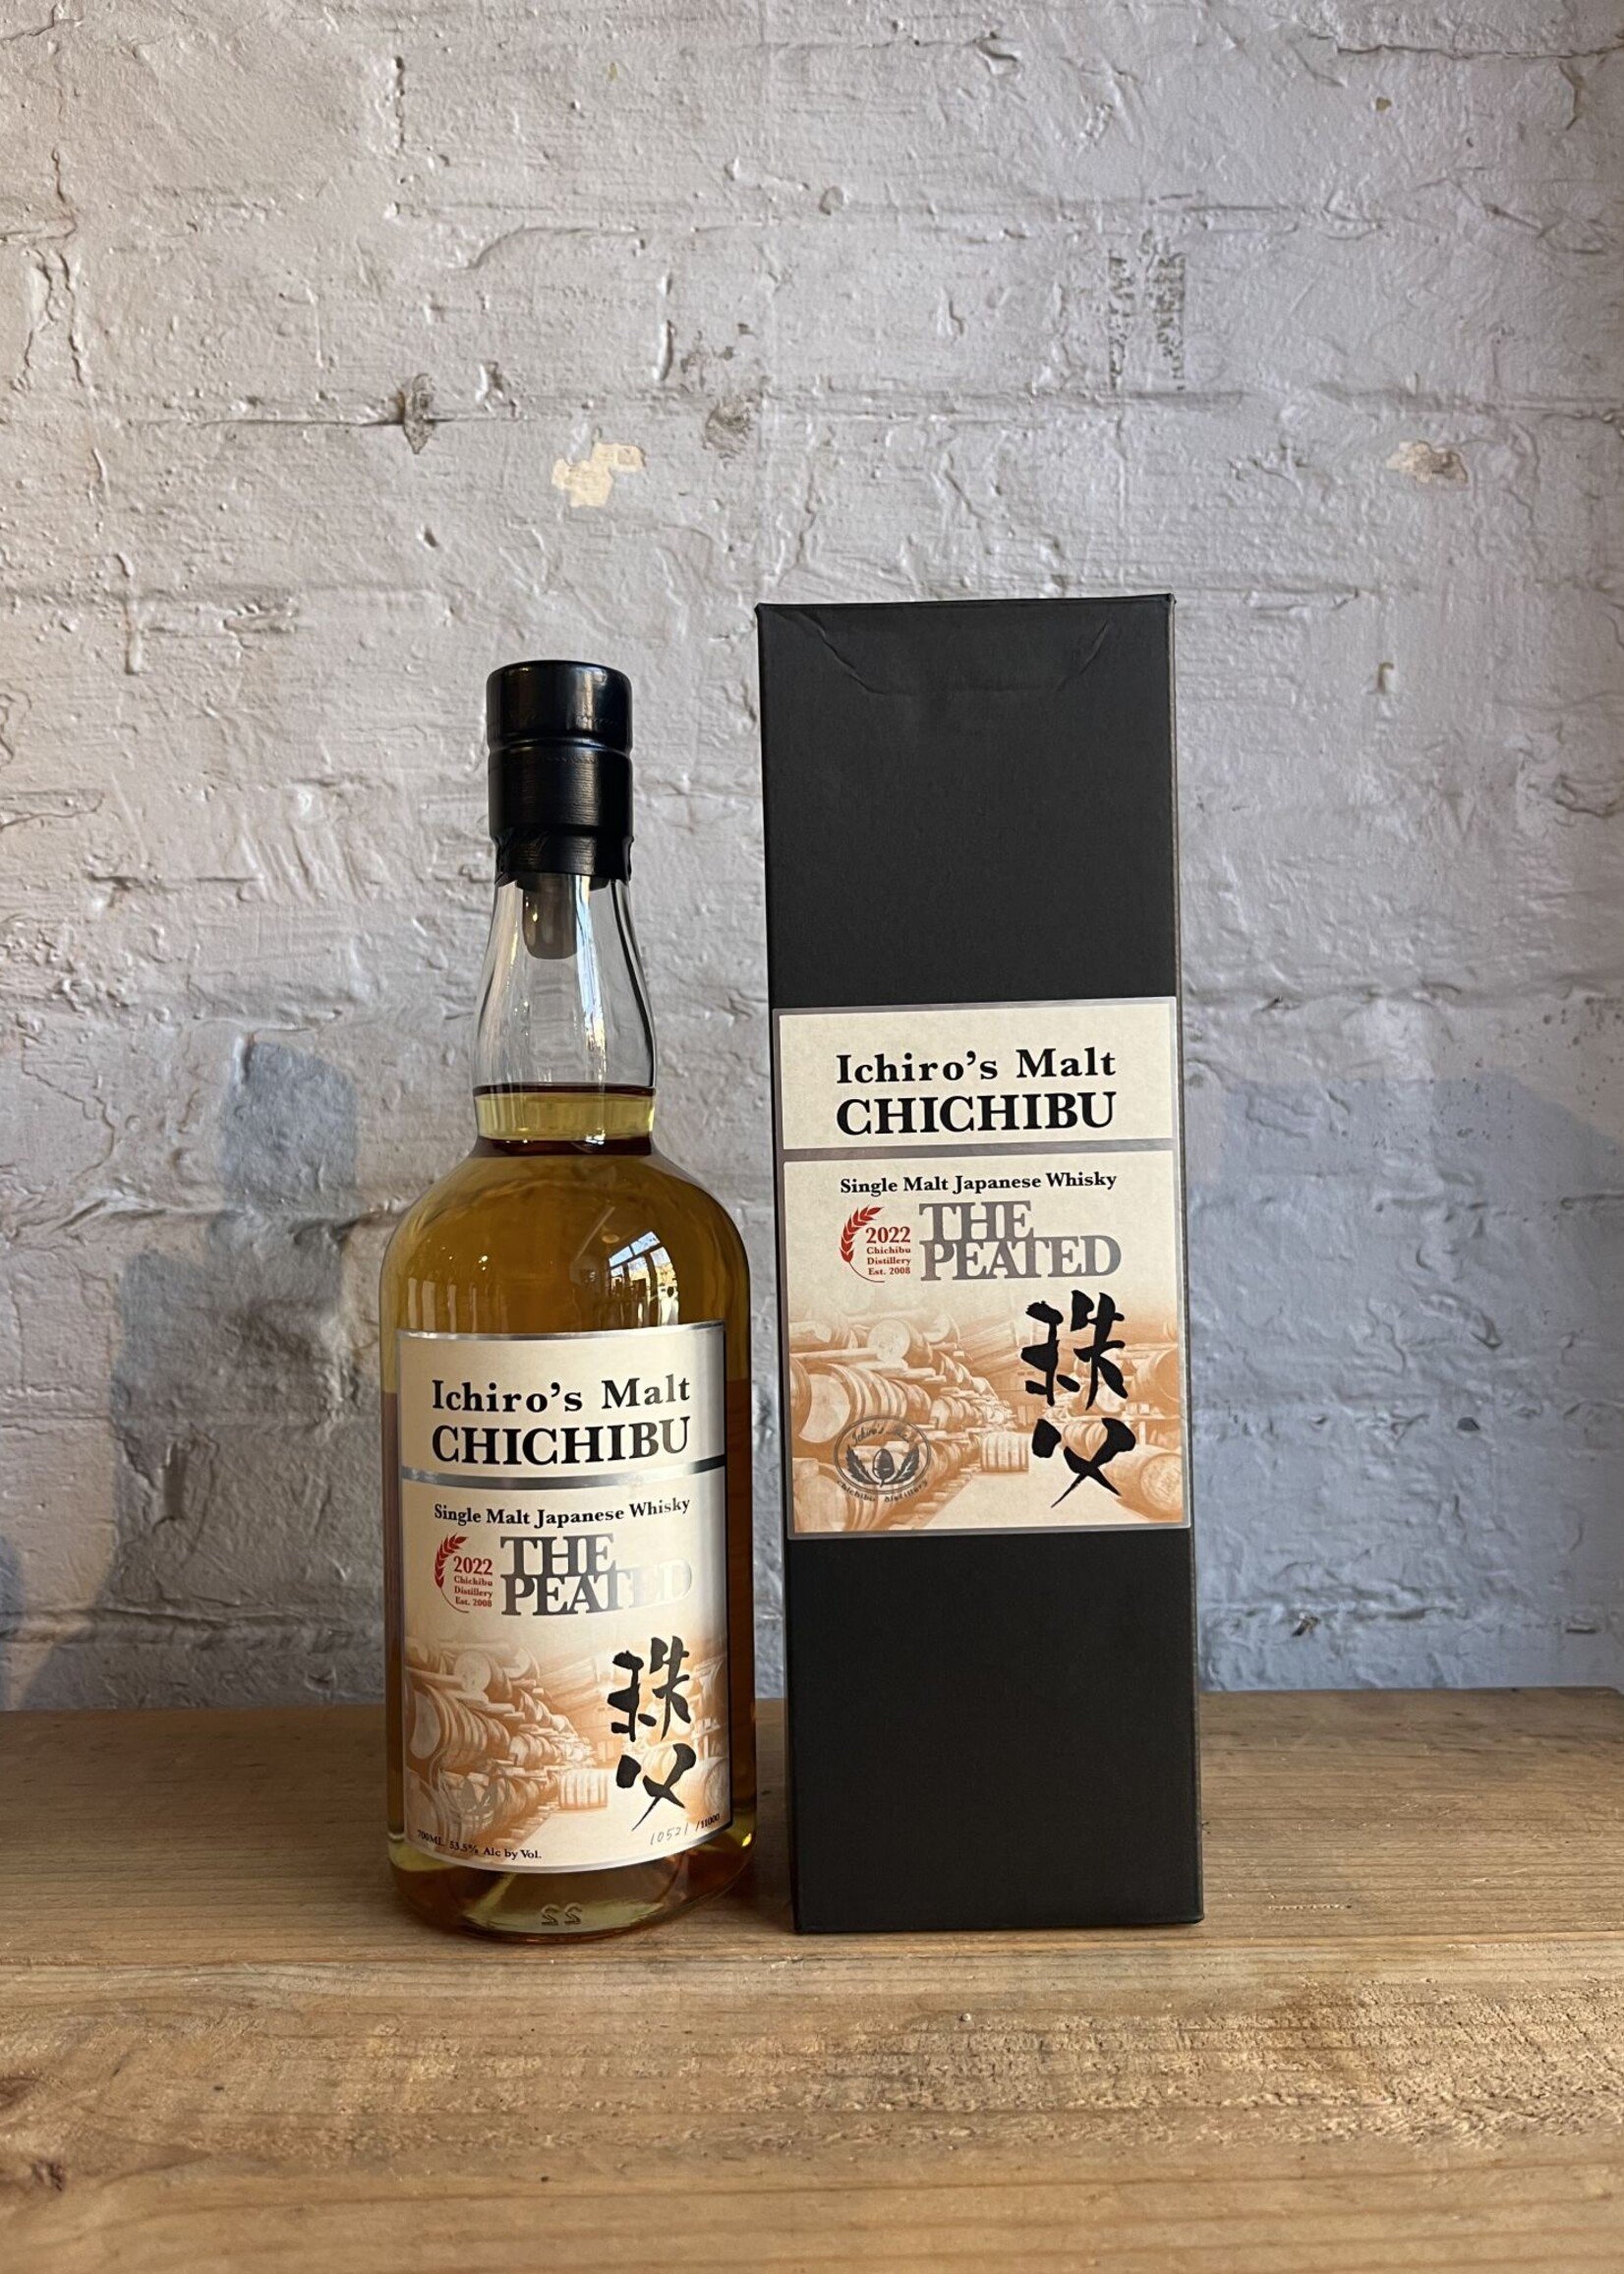 Chichibu Ichiro’s Malt 2022 The Peated Single Malt Whisky - Saitama, Japan (700ml)